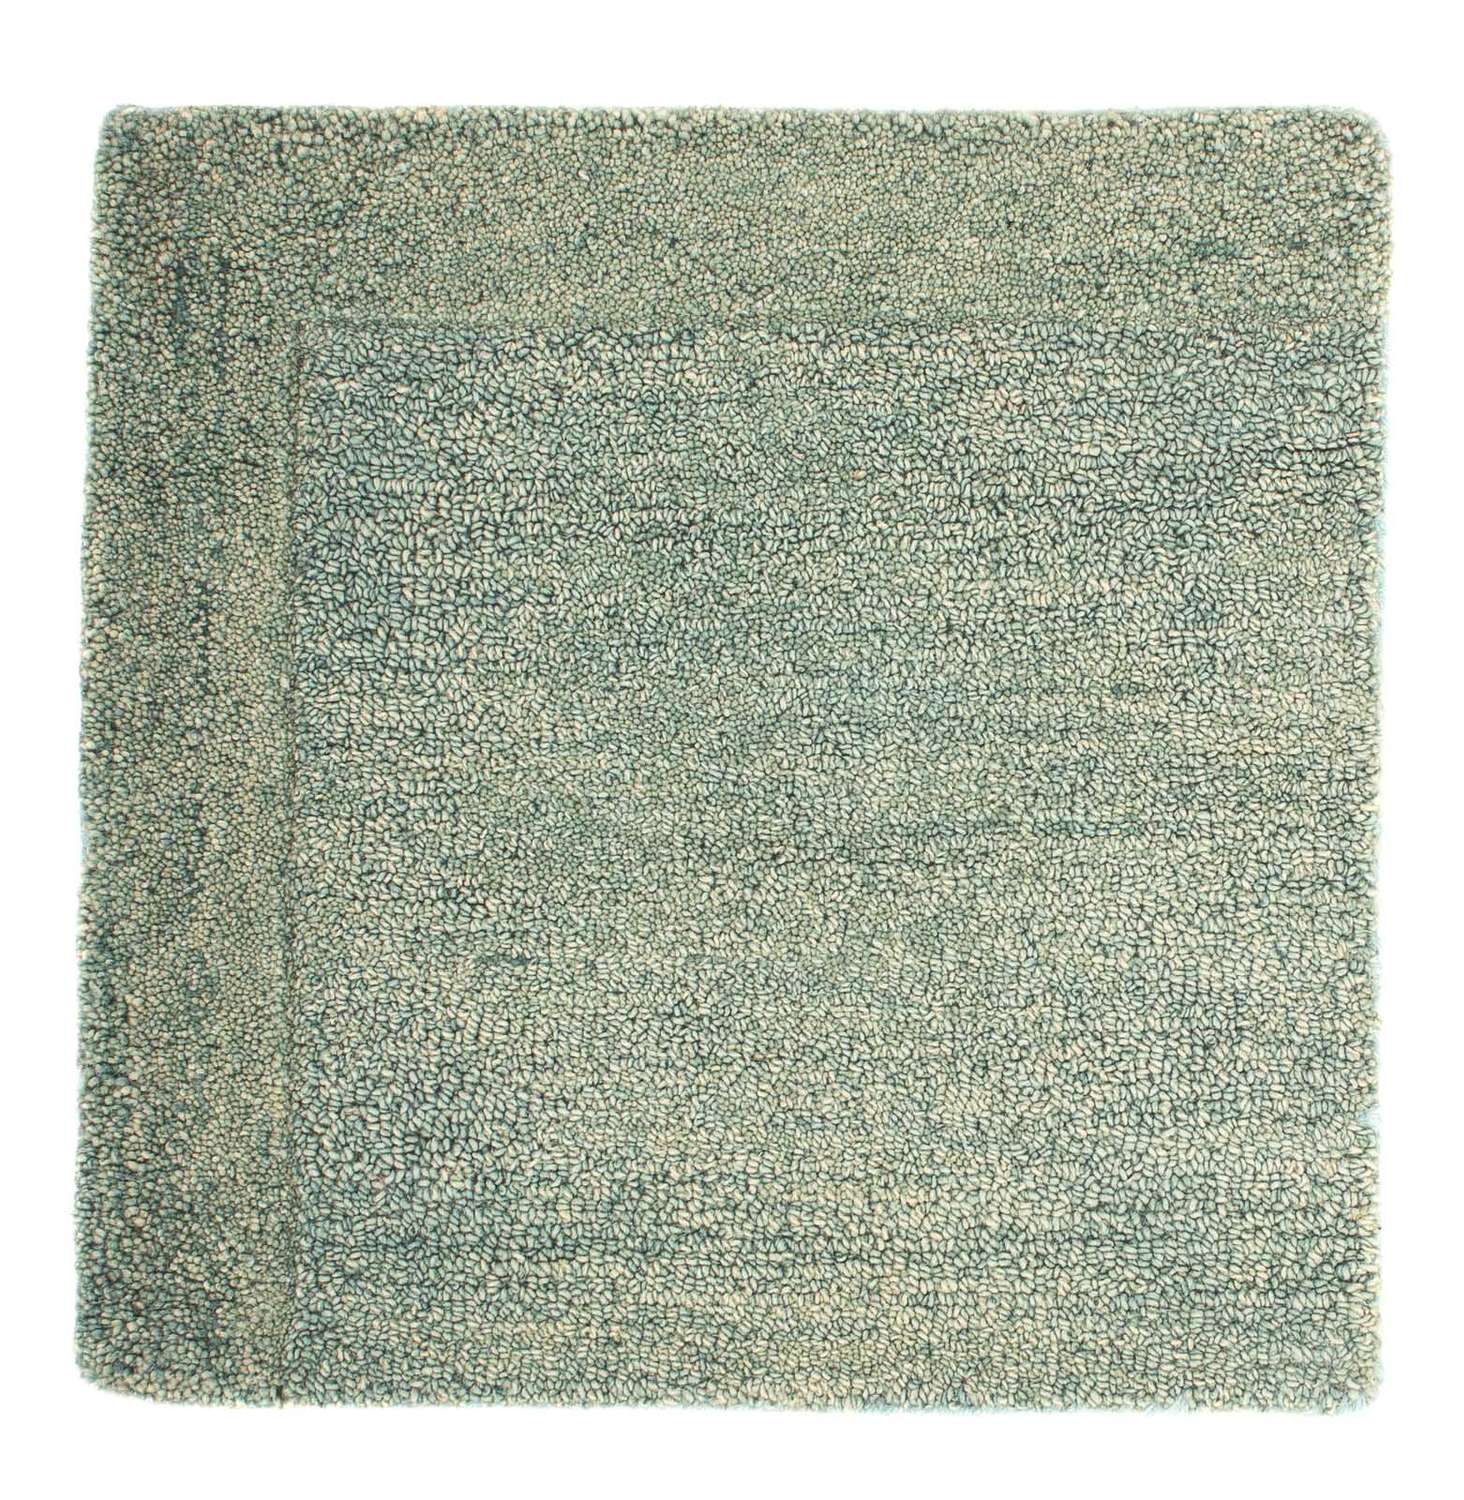 Wool Rug square  - 47 x 47 cm - green